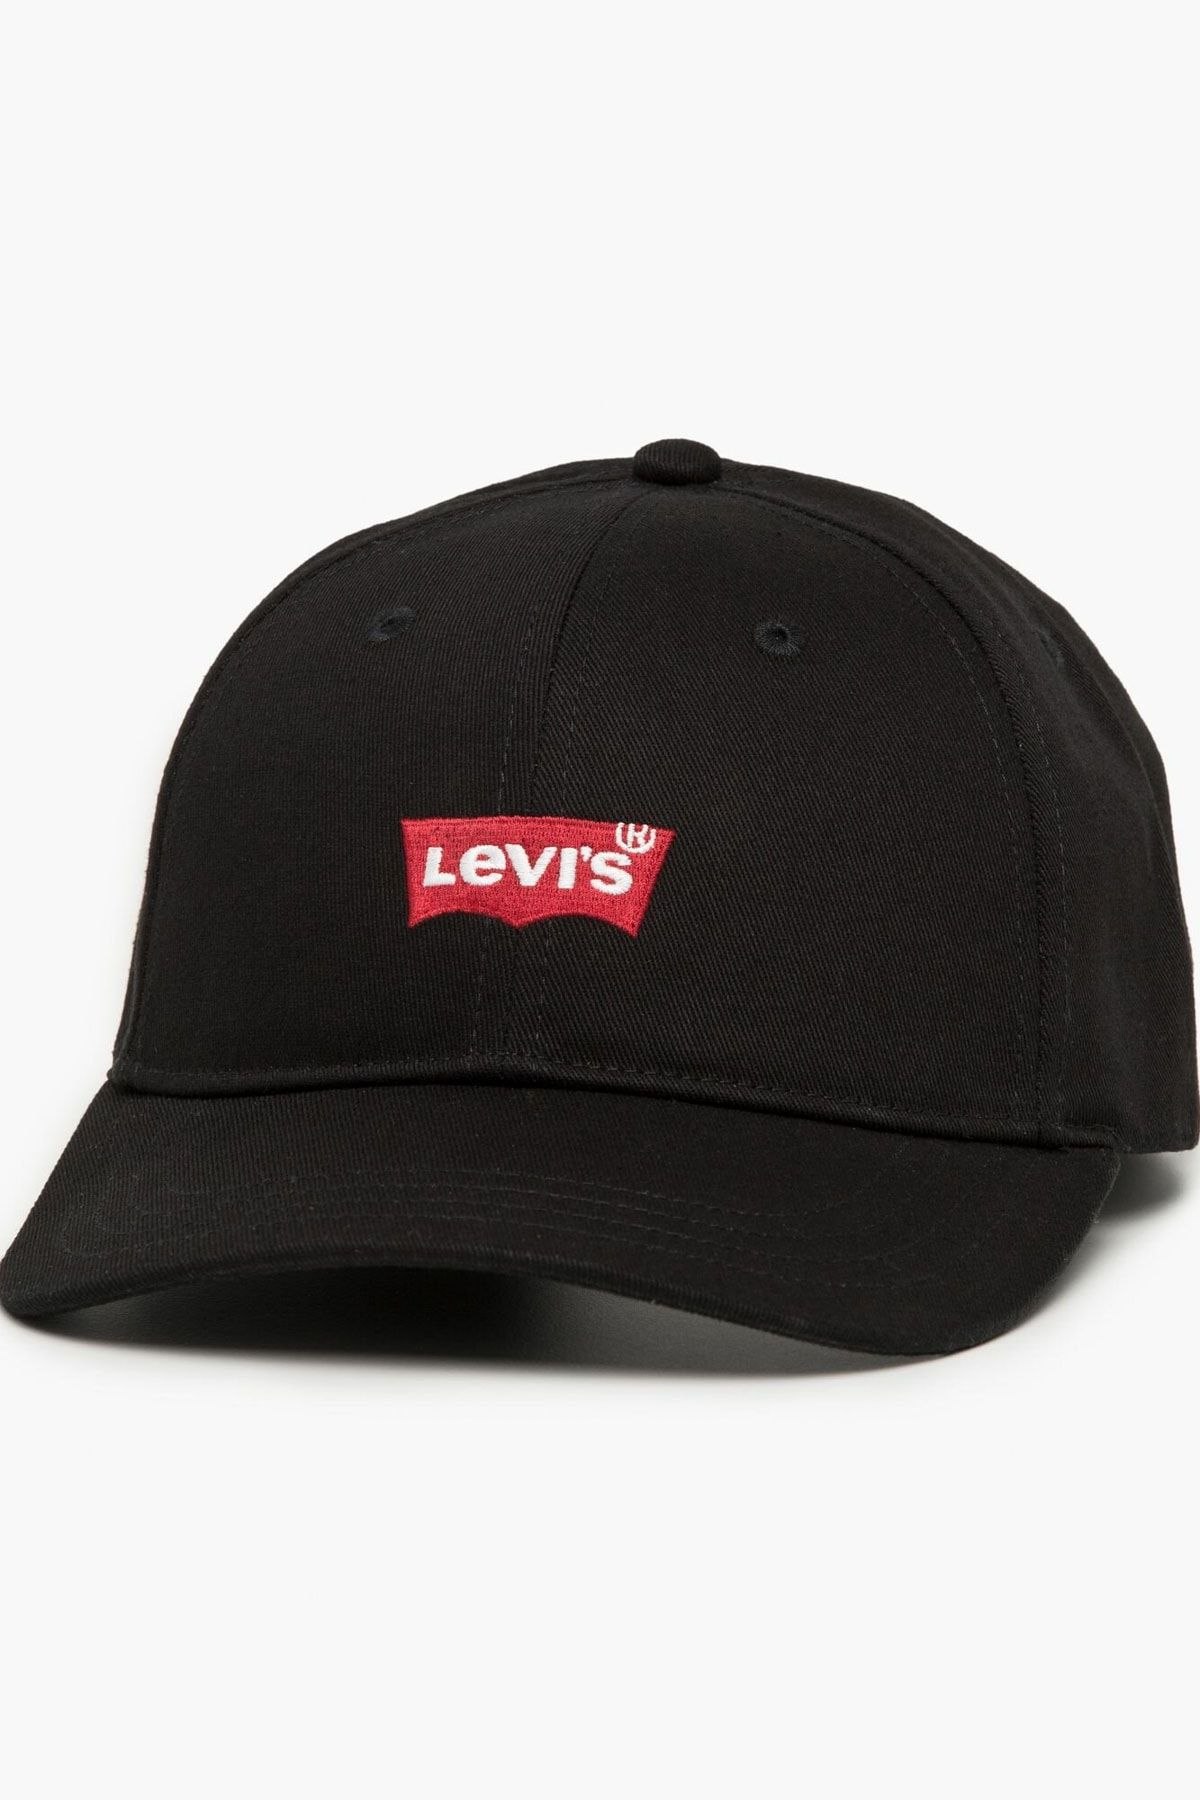 Levi's Unisex Siyah Şapka - 38021-0218